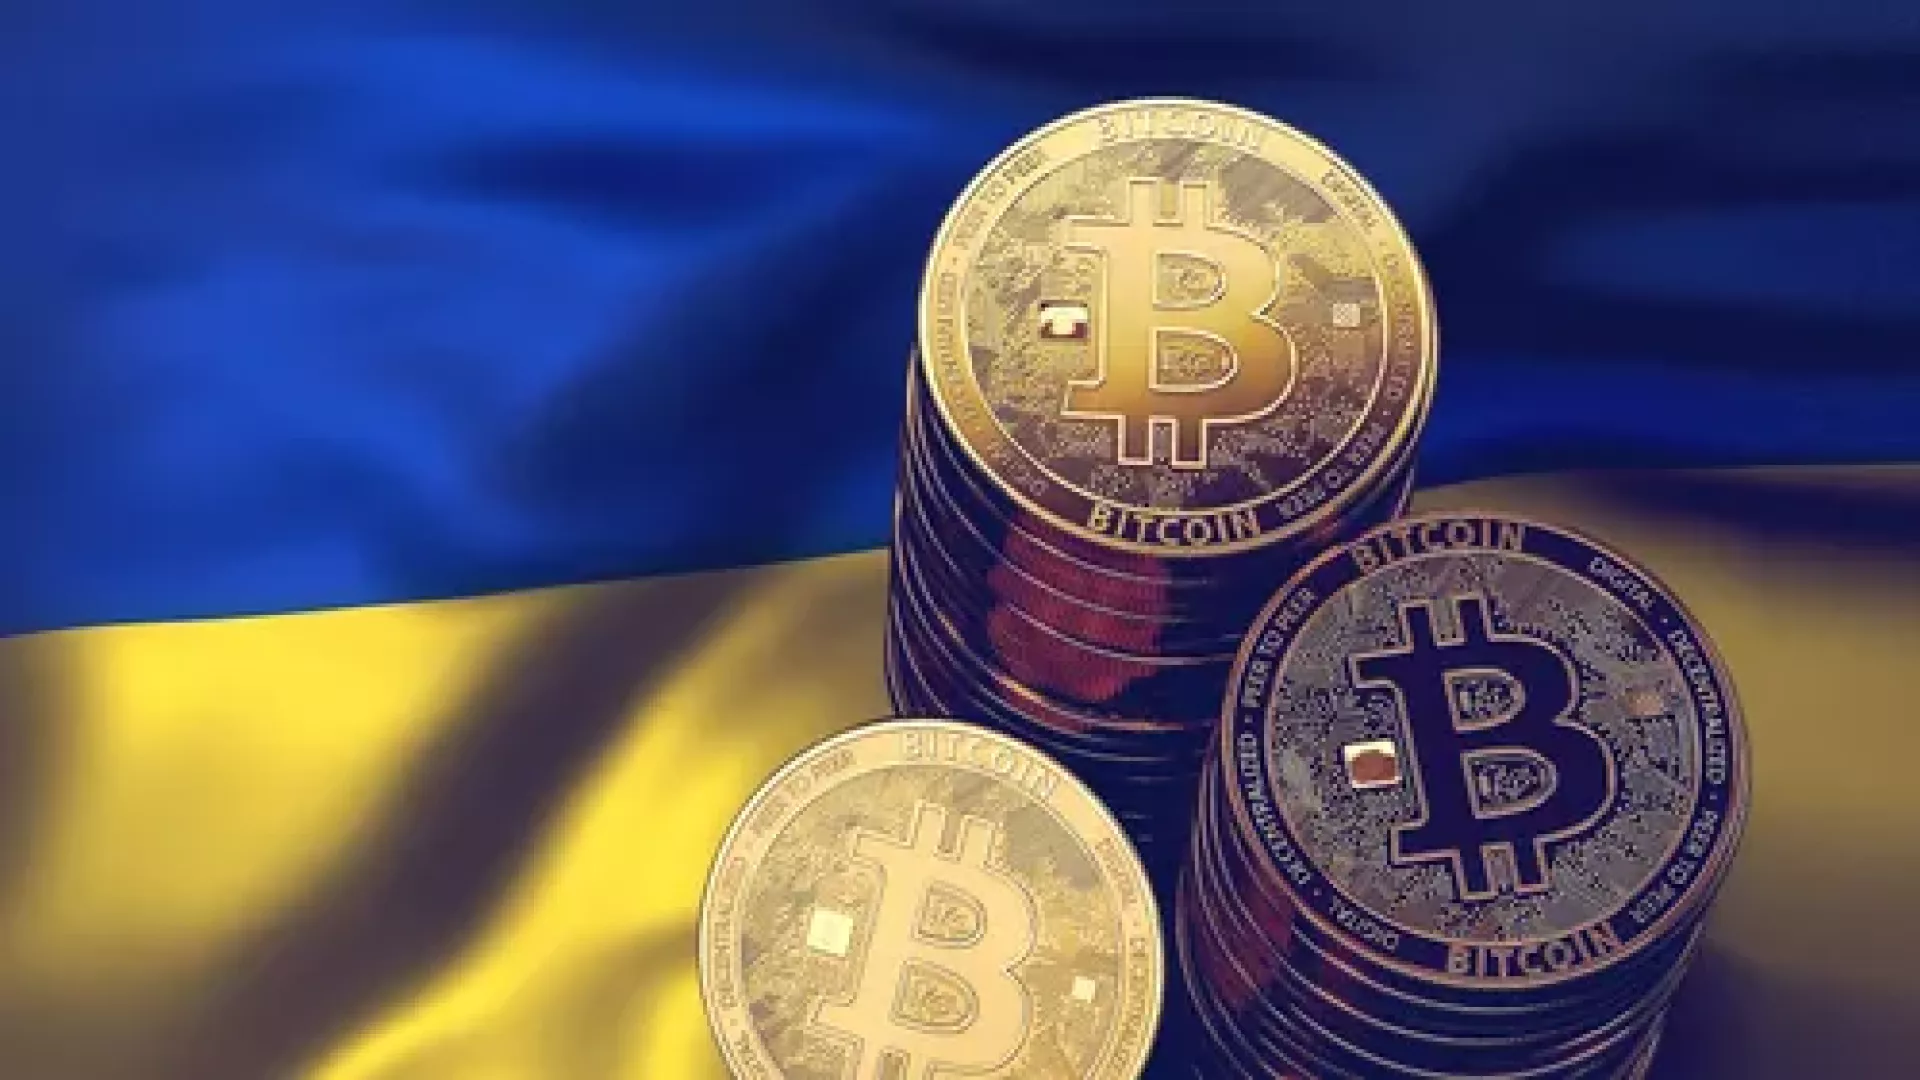 Ukrajina legalizovala Bitcoin a prijíma dary v kryptomenách